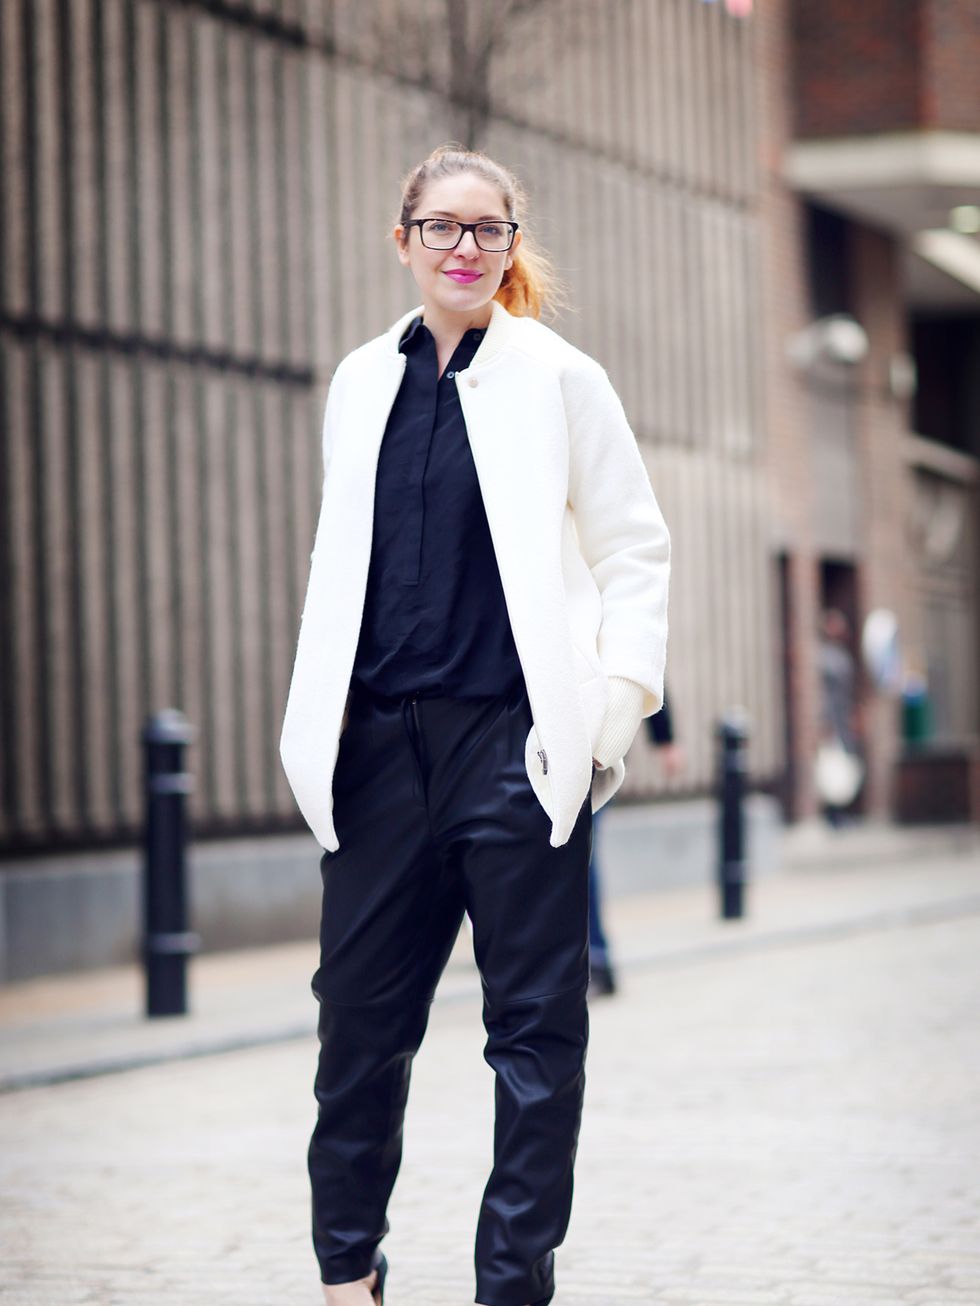 <p>Natasha Pearlman - Deputy Editor.</p>

<p>Zara coat and trousers, Prada glasses, Banana Republic shirt and Whistles shoes.</p>